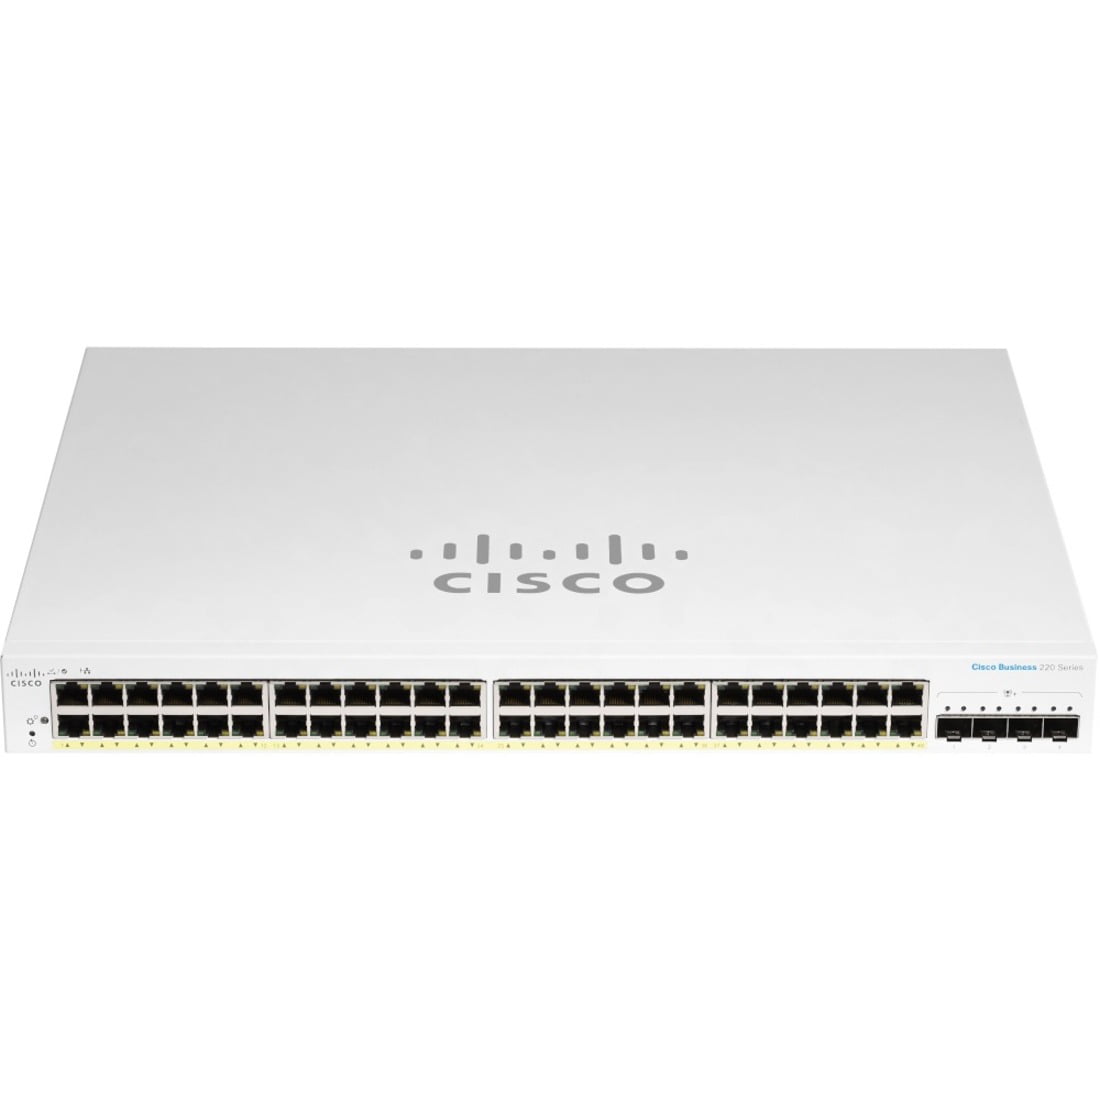 Cisco CBS220-48P-4X-NA 48 Port GE PoE 4 x 10G SFP Plus Ethernet Smart Switch, White